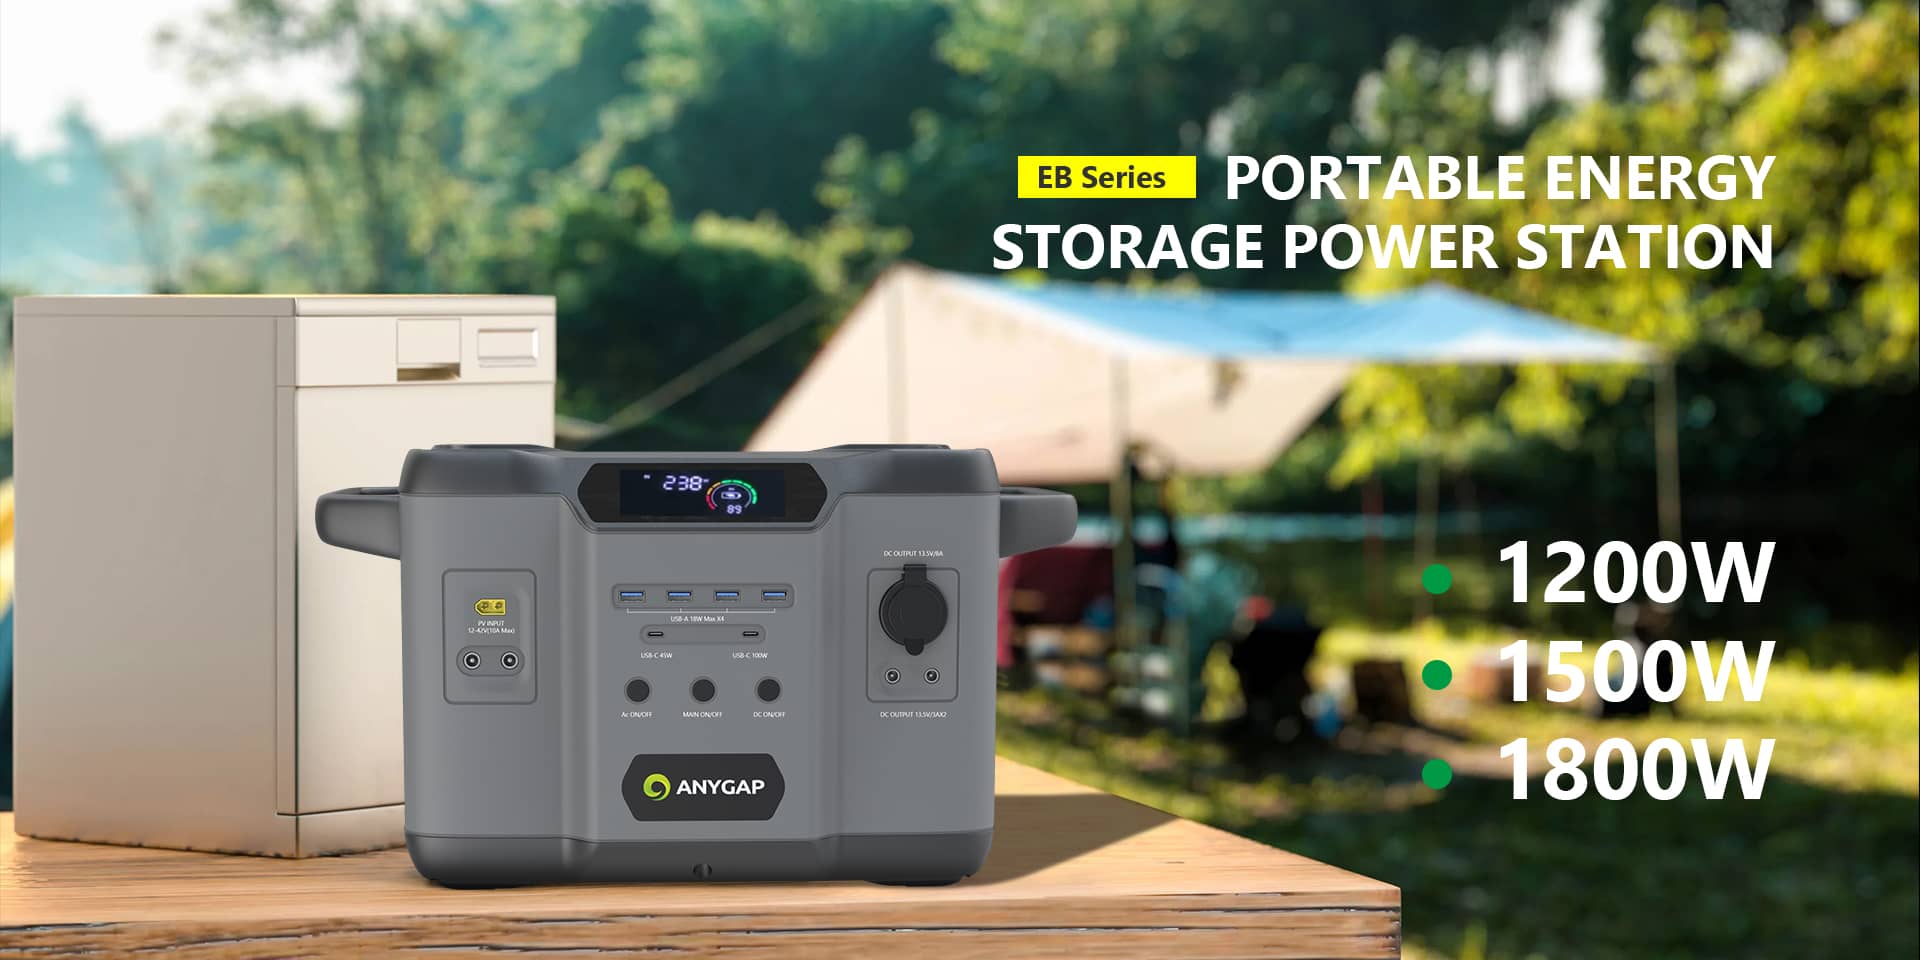 EB Series Portable energy storage